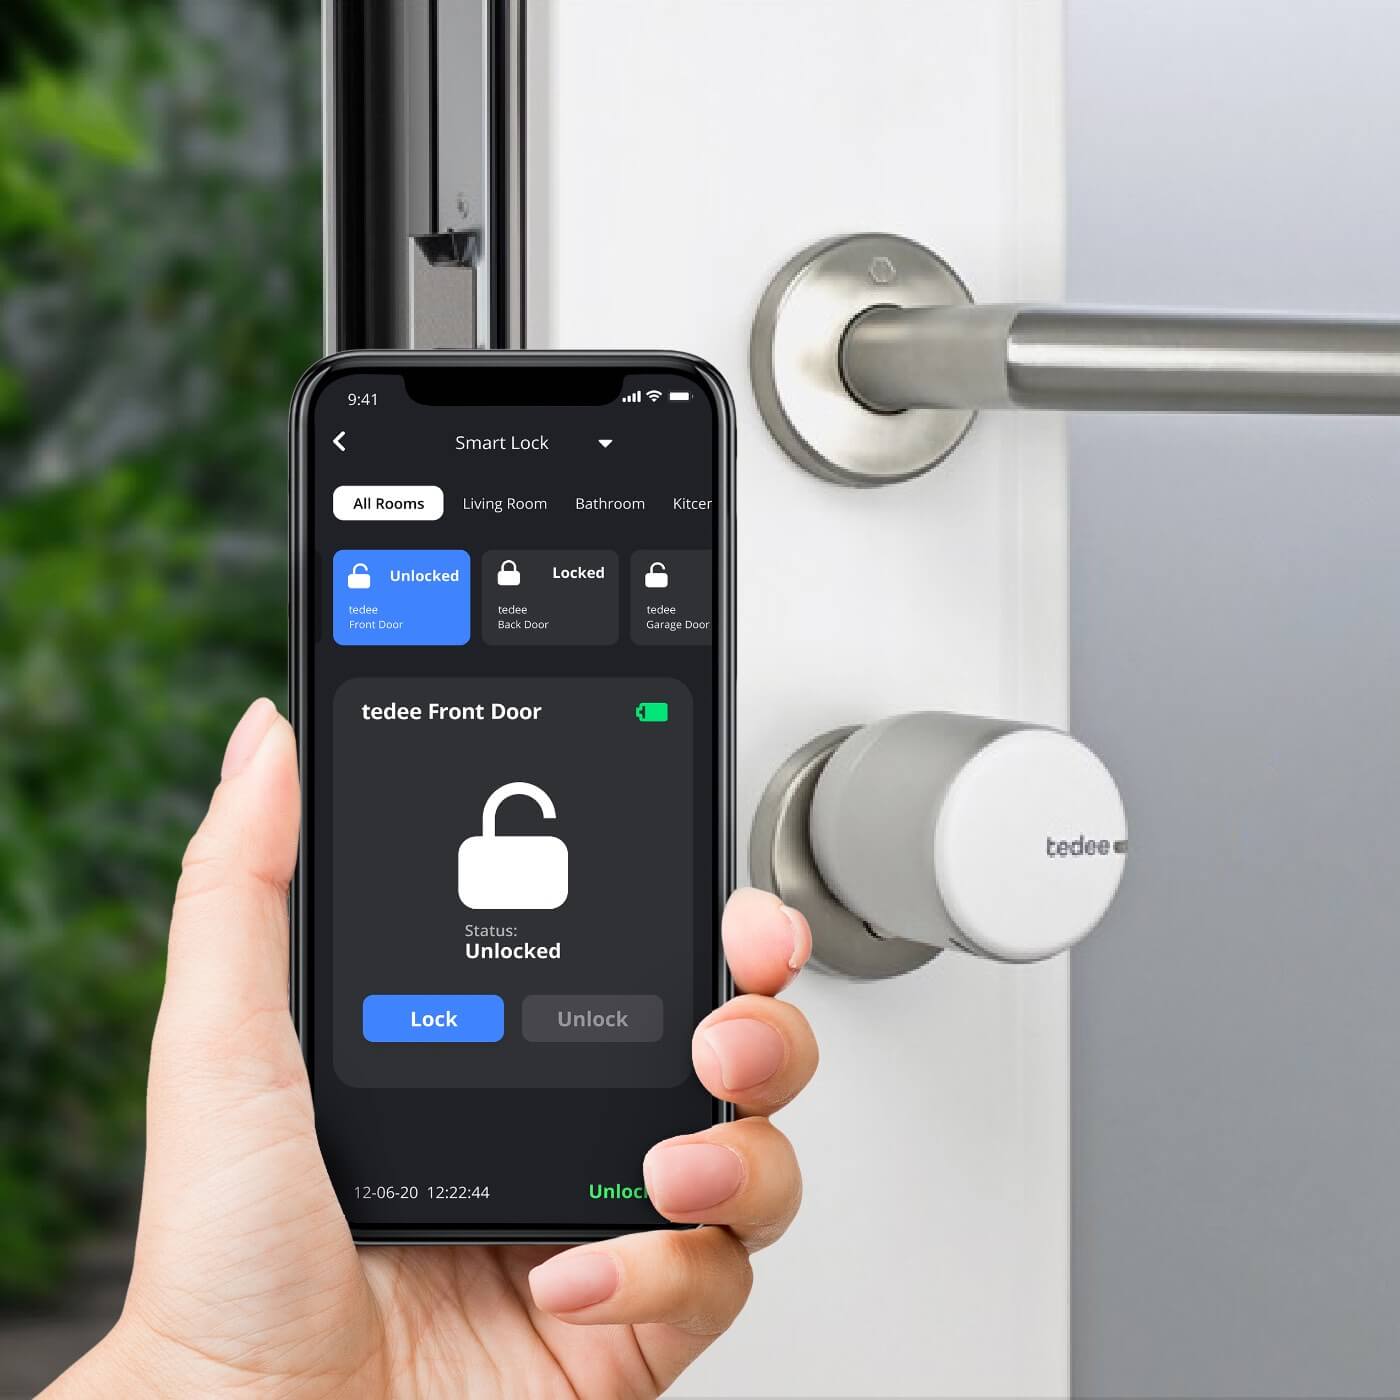 Brisant-Secure launch Ultion Nuki smart lock - HomeKit Authority